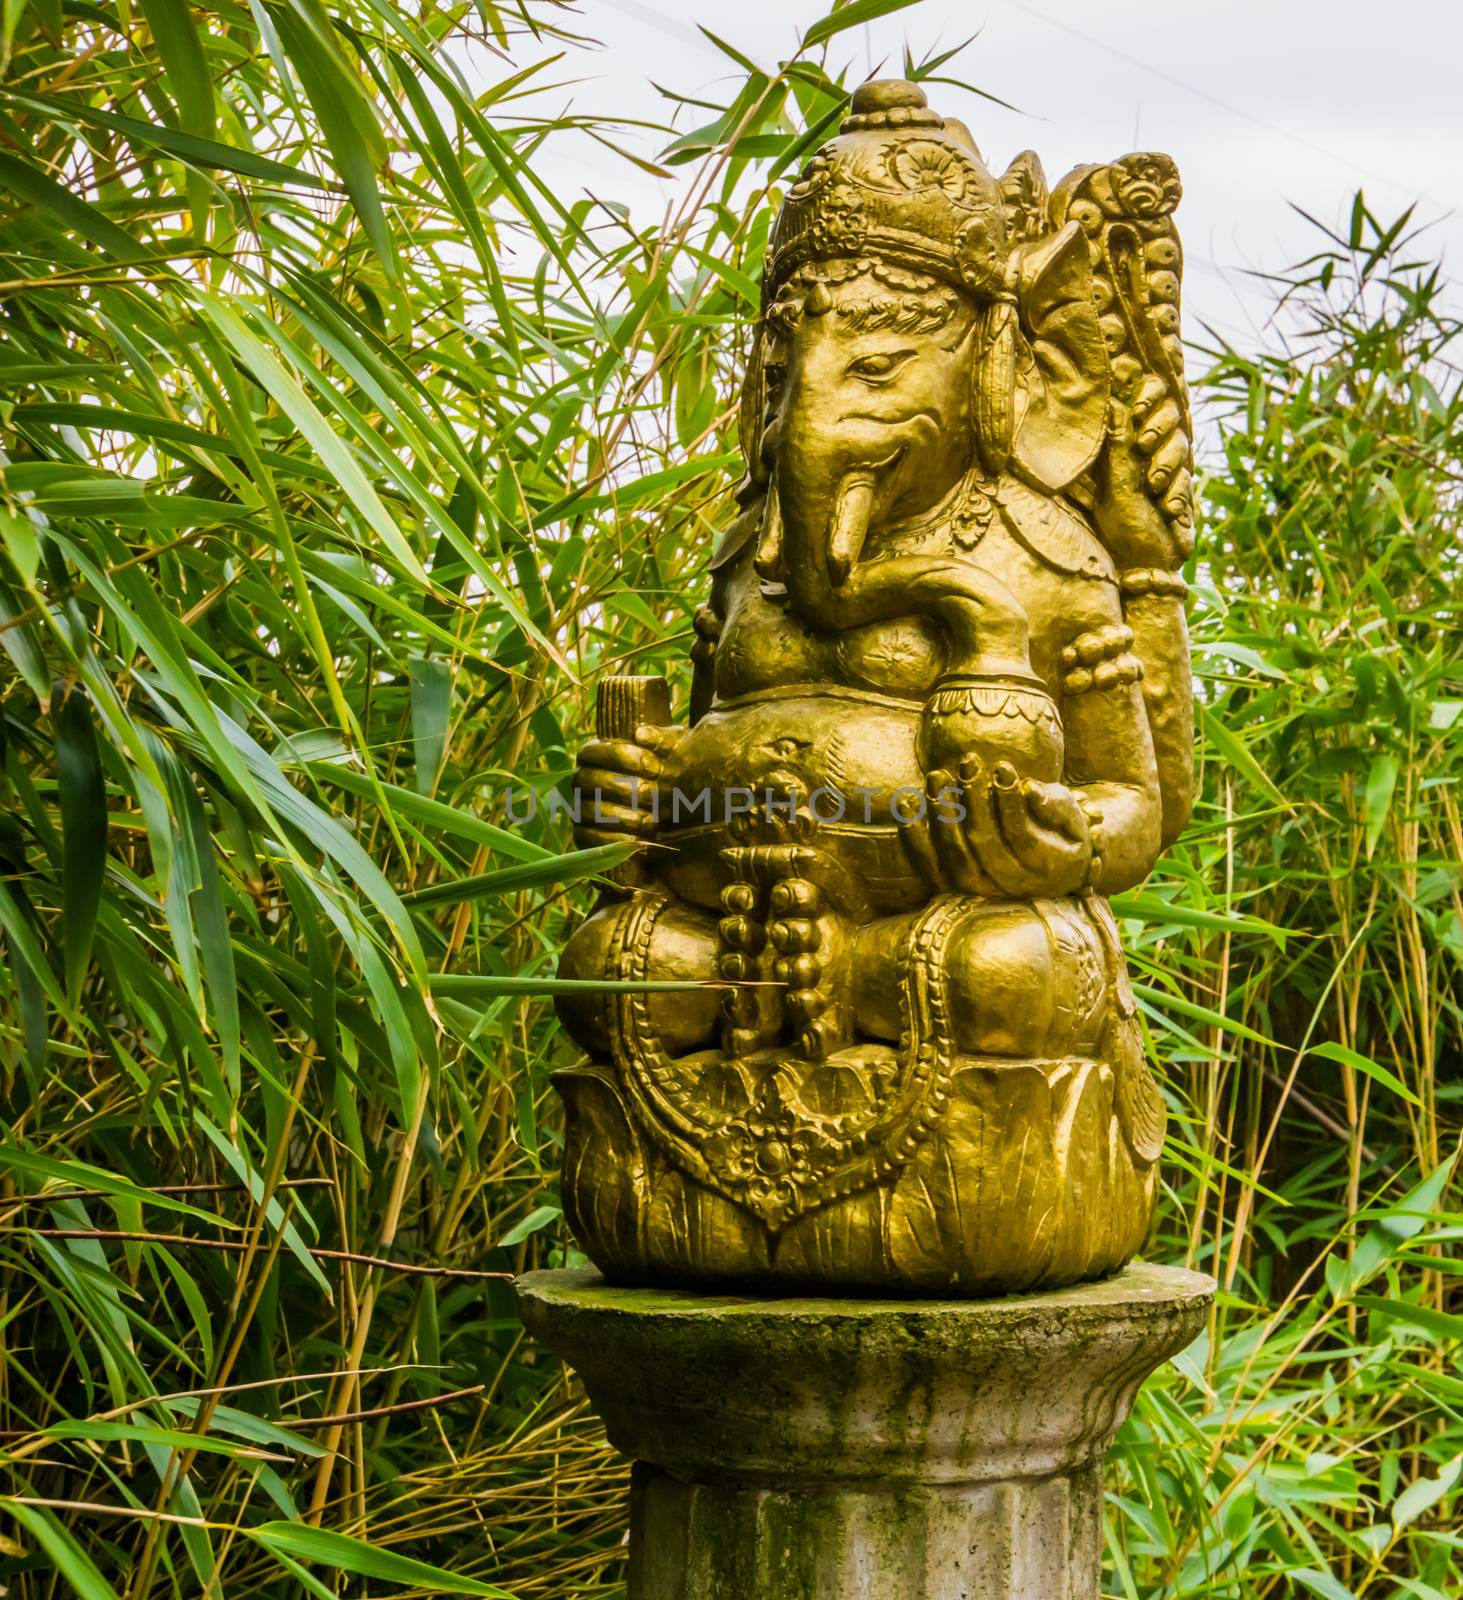 Golden elephant statue, God Ganesha sculpture, spiritual decorations for the garden by charlottebleijenberg